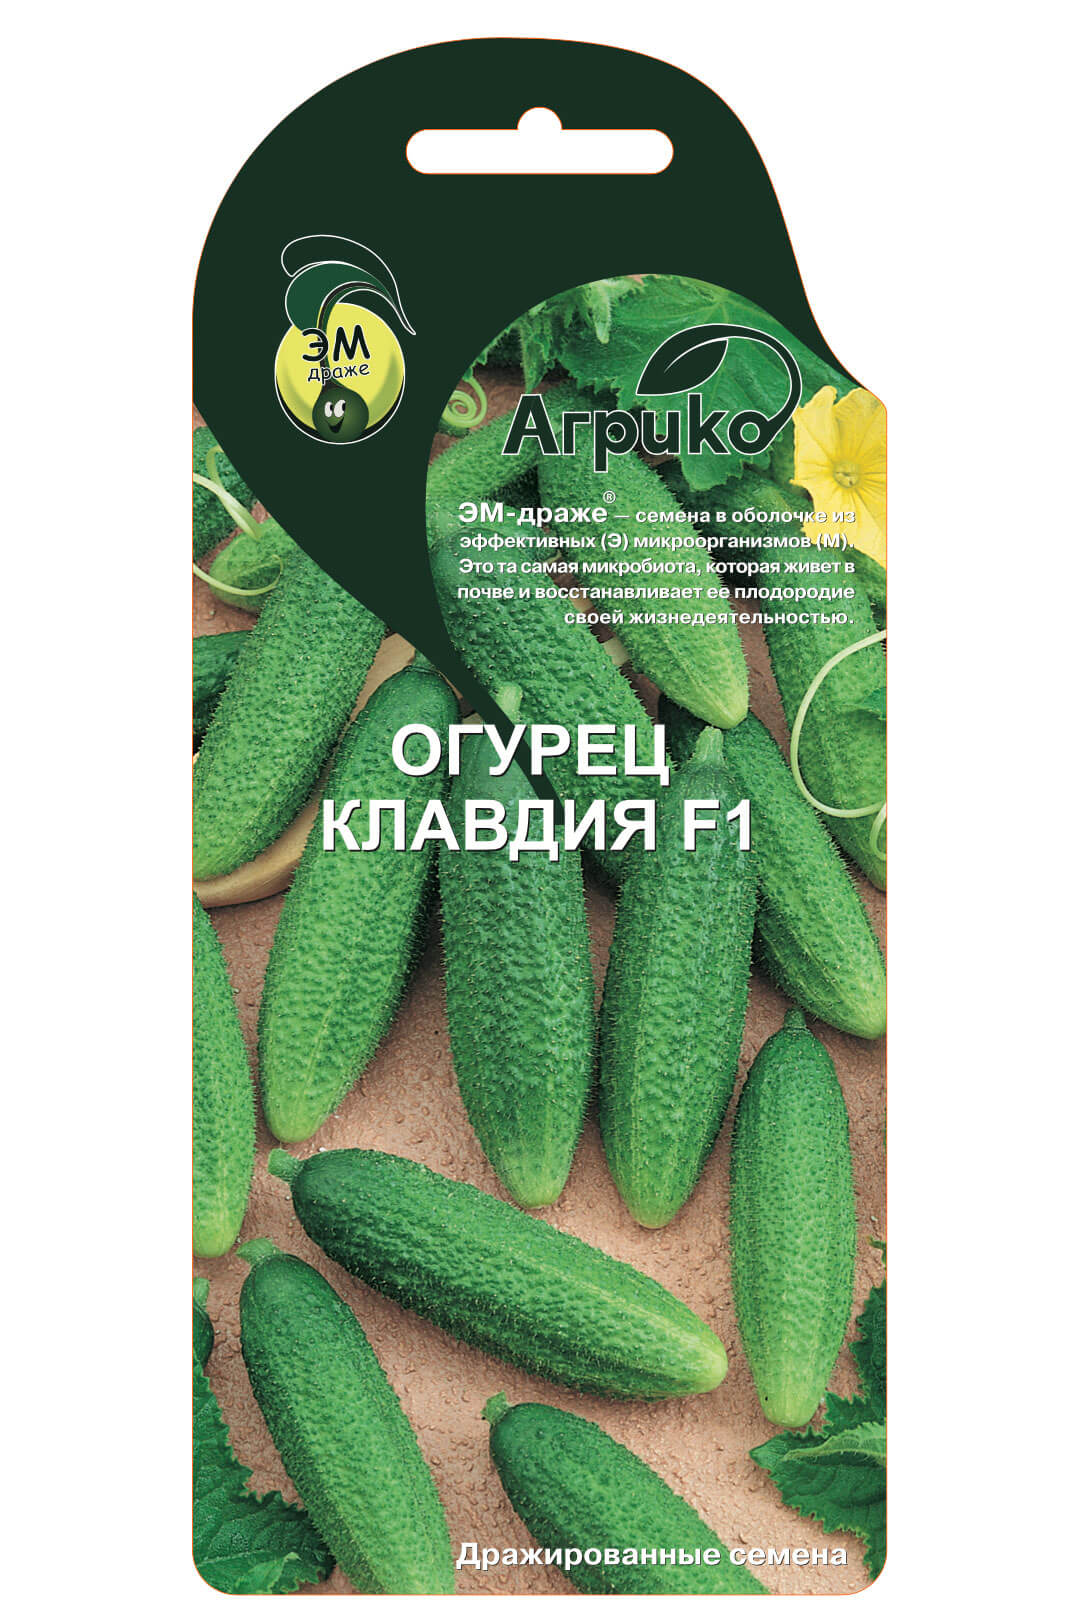 emdraje/emdrajeagriko-cucumber-klavdiya-f1-1.jpg